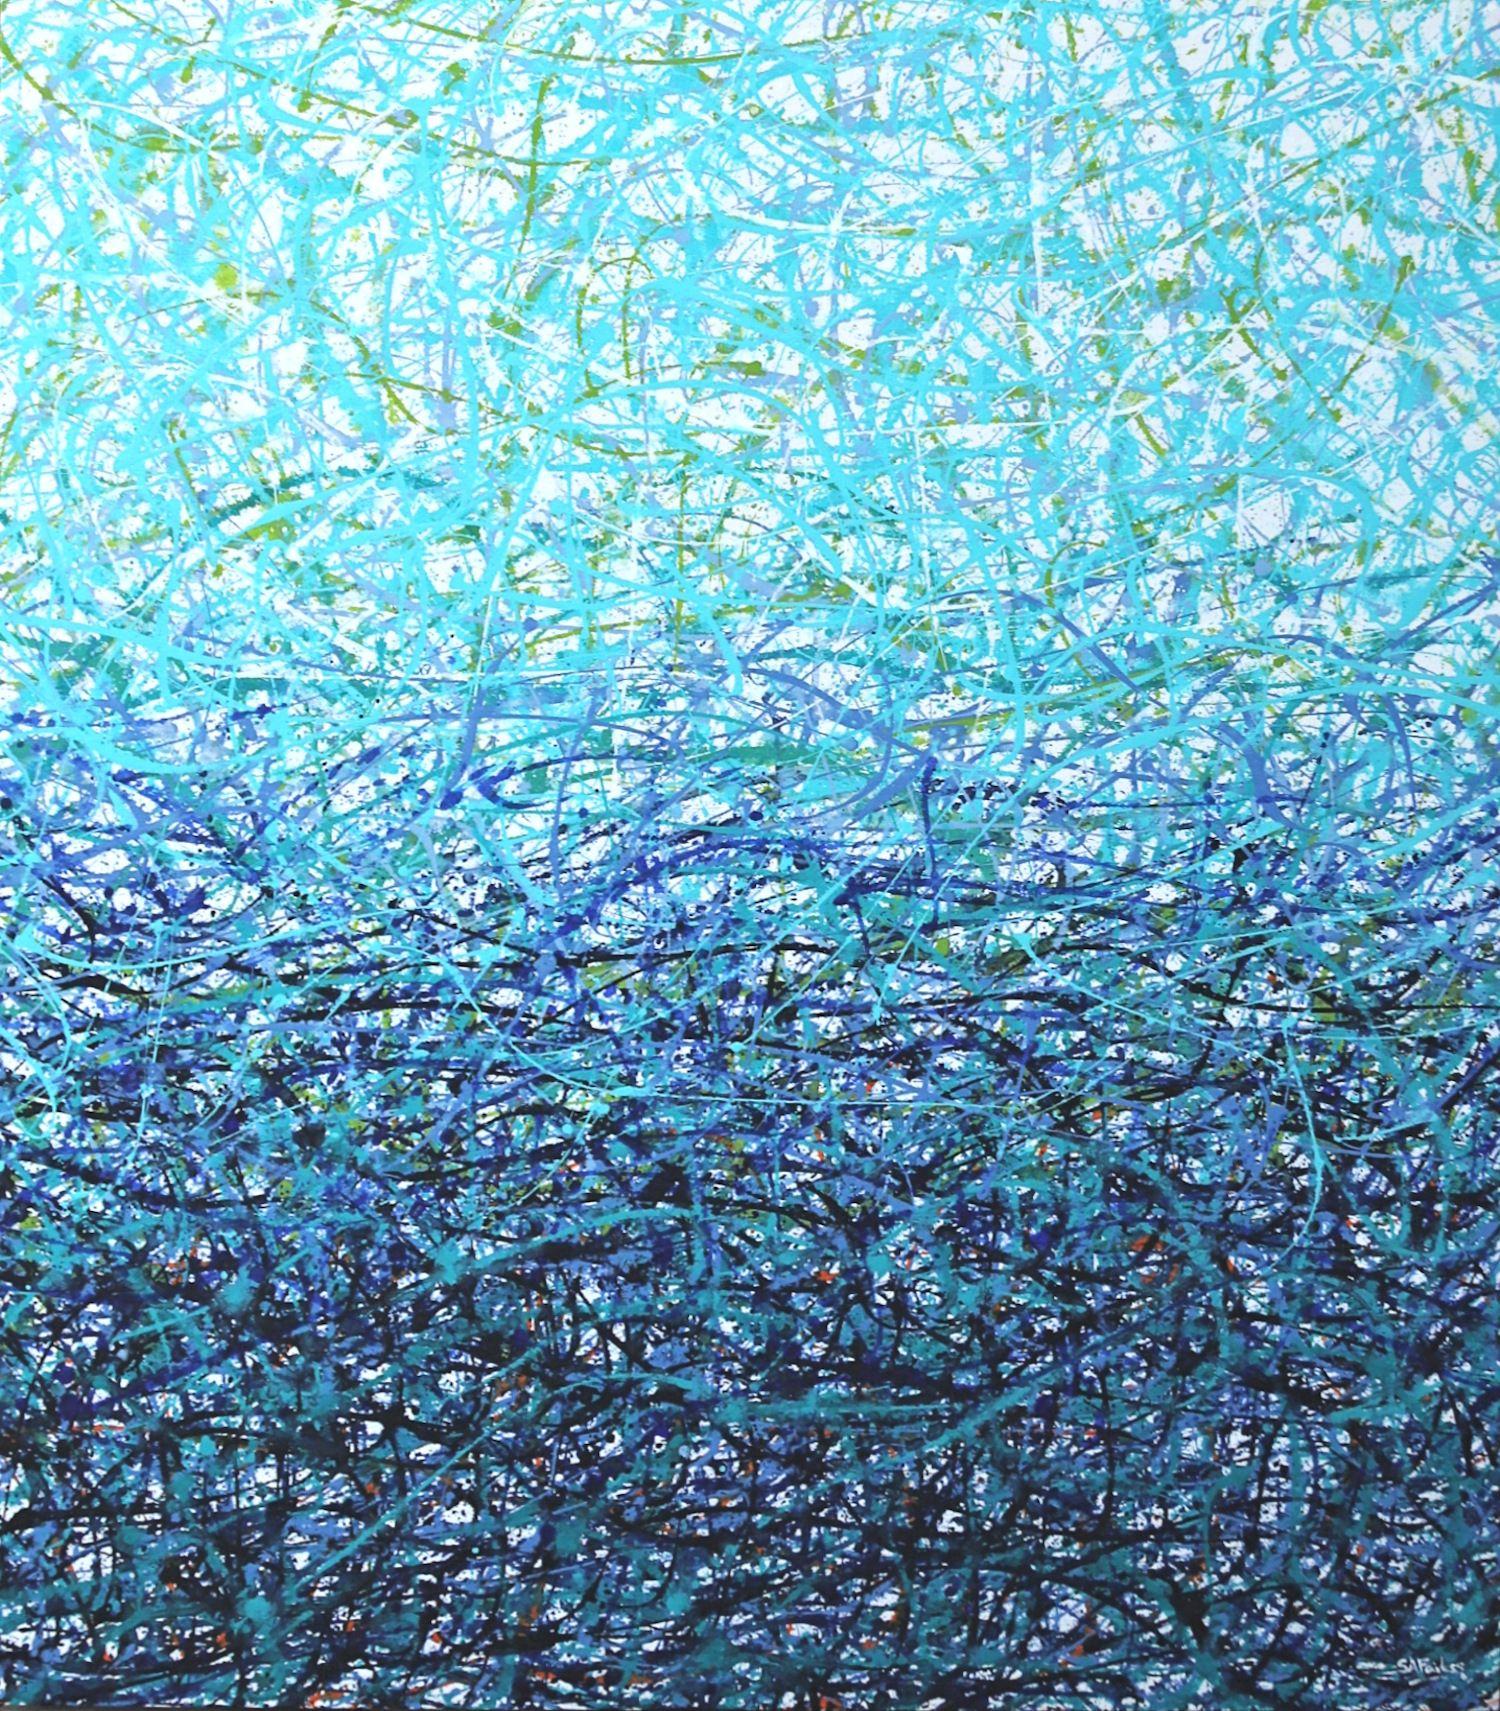 Simon Fairless Abstract Painting - Spirit of the Sea, Painting, Acrylic on Canvas